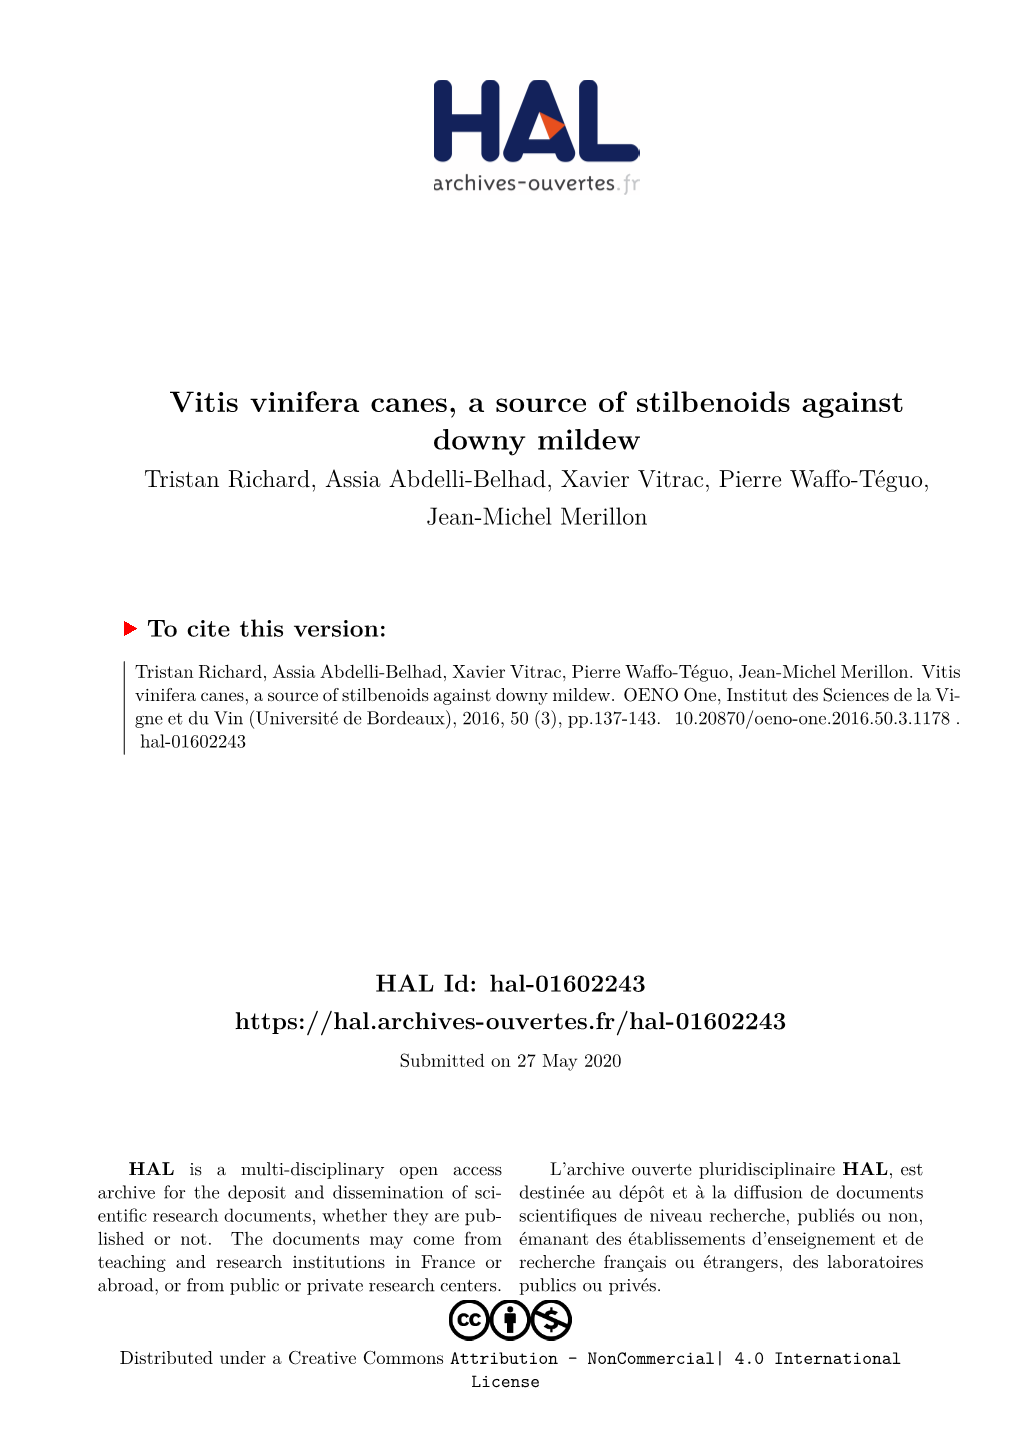 Vitis Vinifera Canes, a Source of Stilbenoids Against Downy Mildew Tristan Richard, Assia Abdelli-Belhad, Xavier Vitrac, Pierre Waffo-Téguo, Jean-Michel Merillon